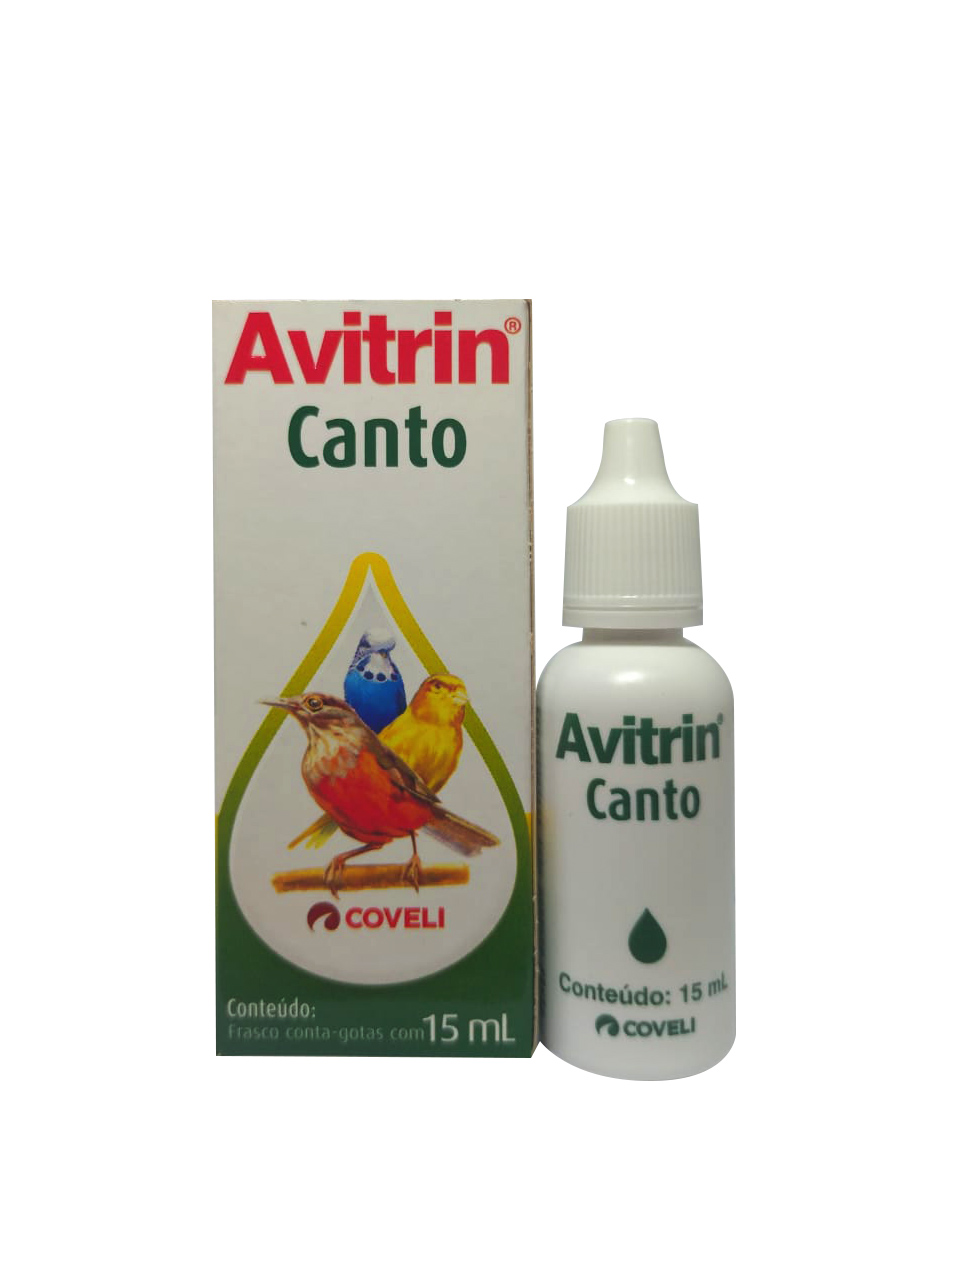 Avitrin Canto 15ml Aves Suplemento Vitamínico Coveli